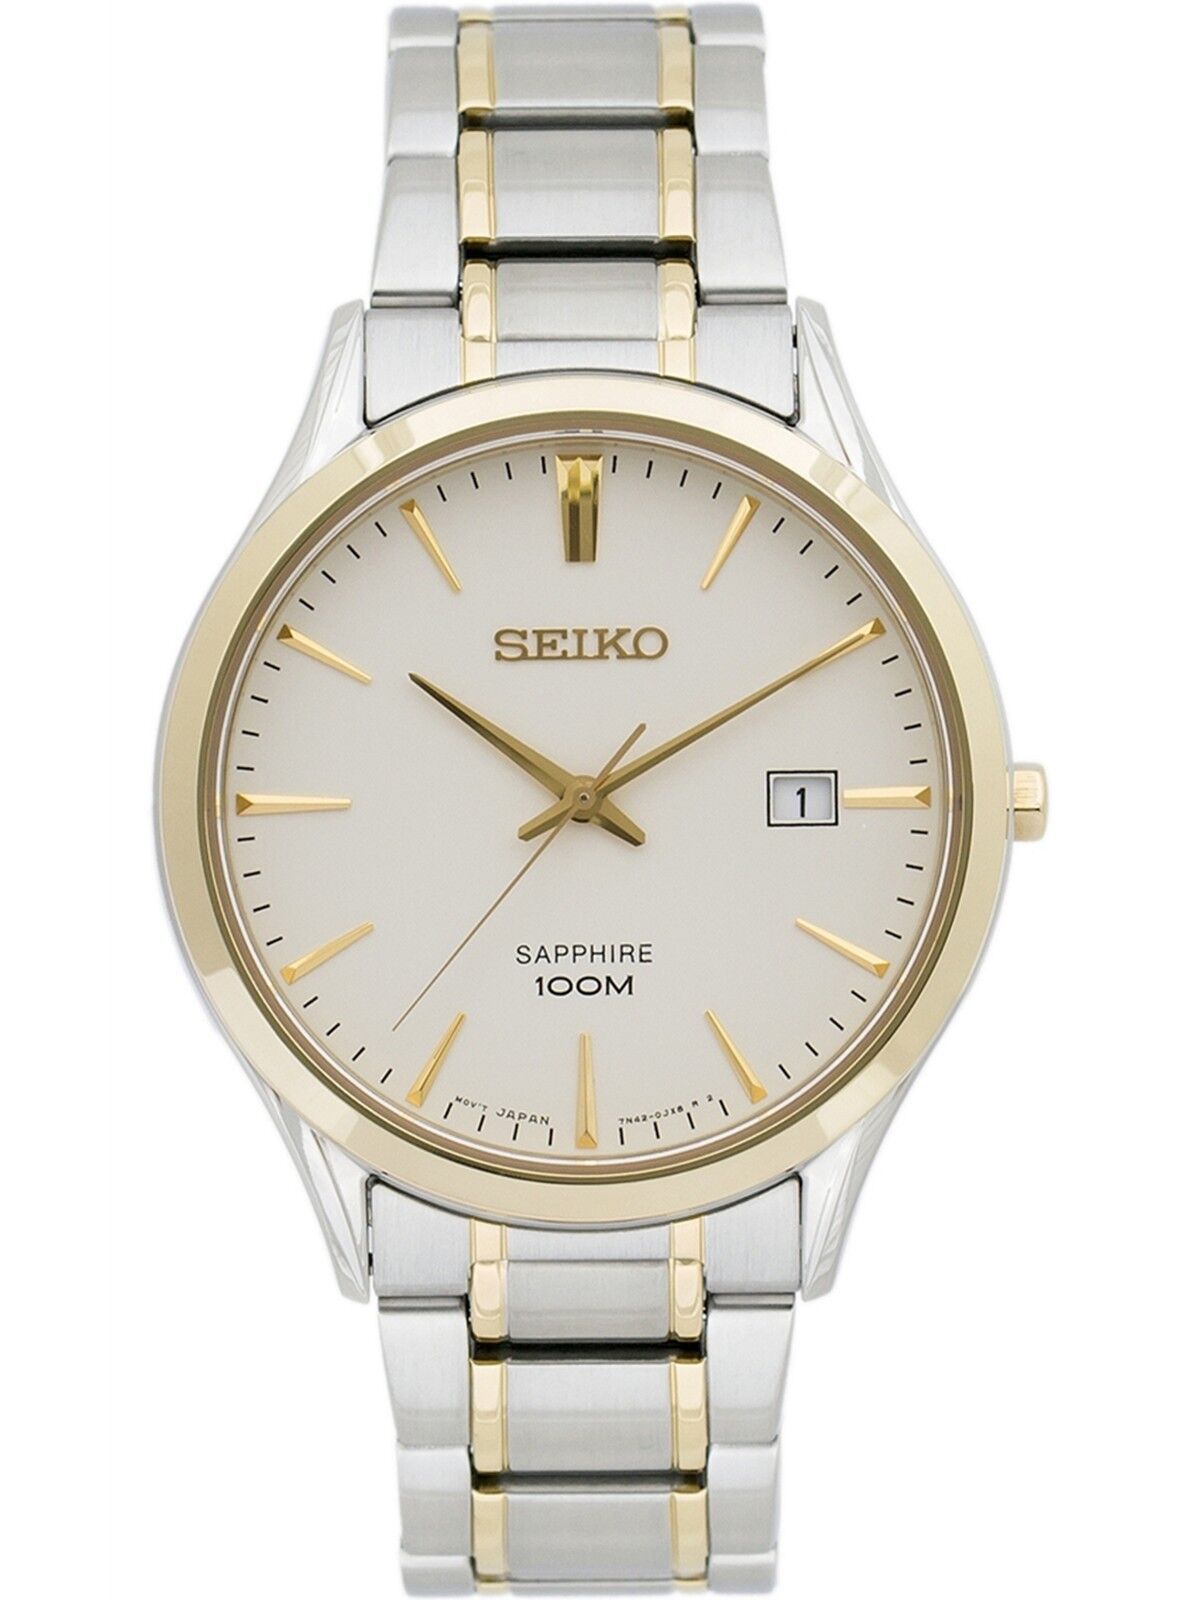 Seiko White Men's Watch - SGEG96 for sale online | eBay